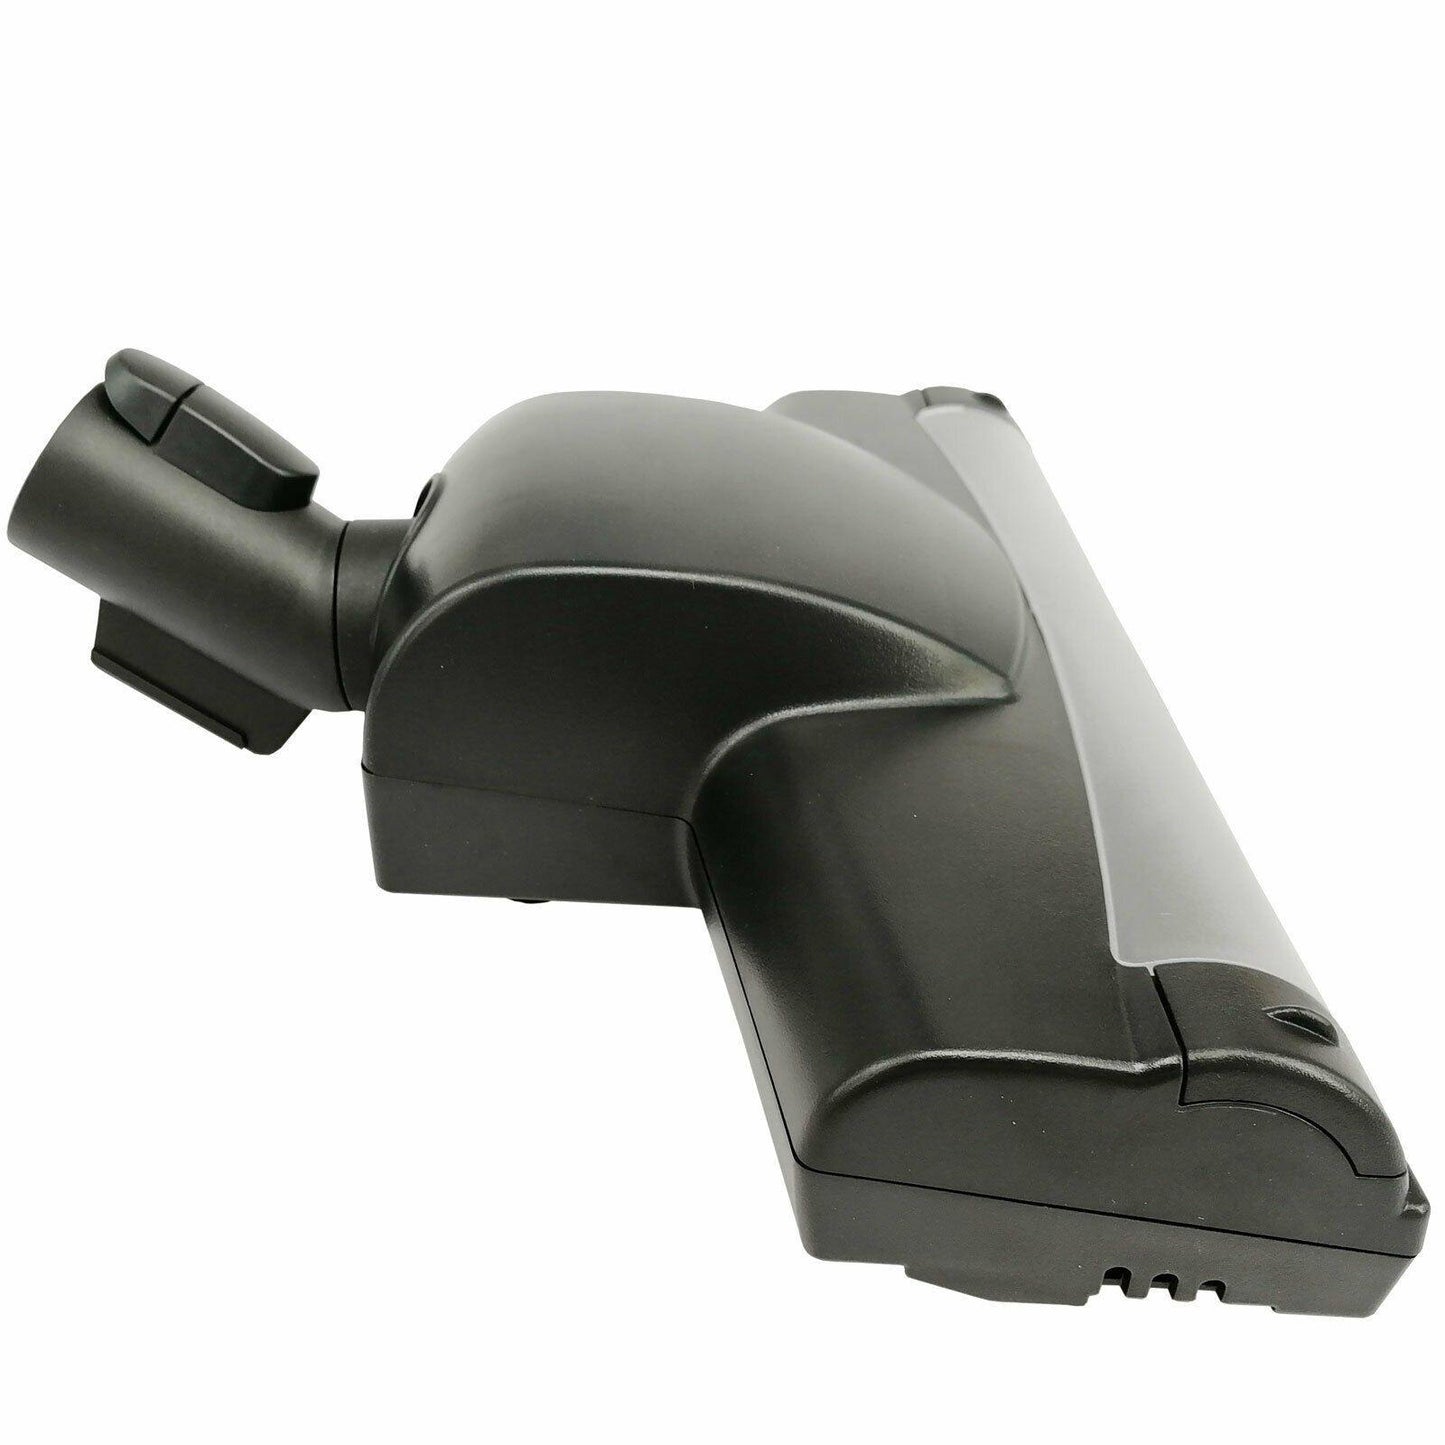 Vacuum Turbo Brush Head For Miele S8310 S8330 S8340 S 8340 S8730 Sparesbarn